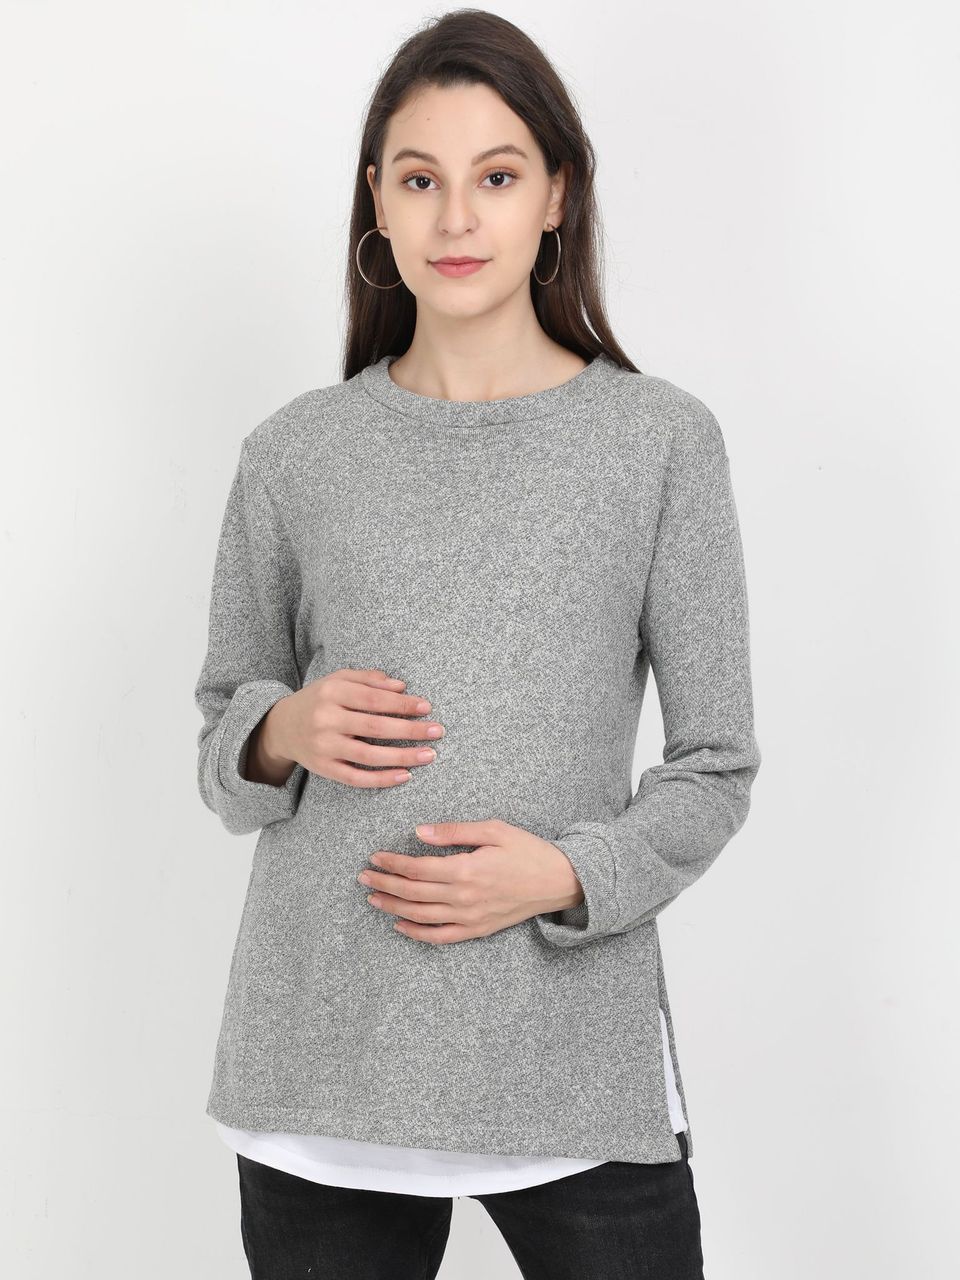 The Mom Store Grey Melange with White Sleeveless Inner Maternity and Nursing Sweatshirt 2 Piece Set